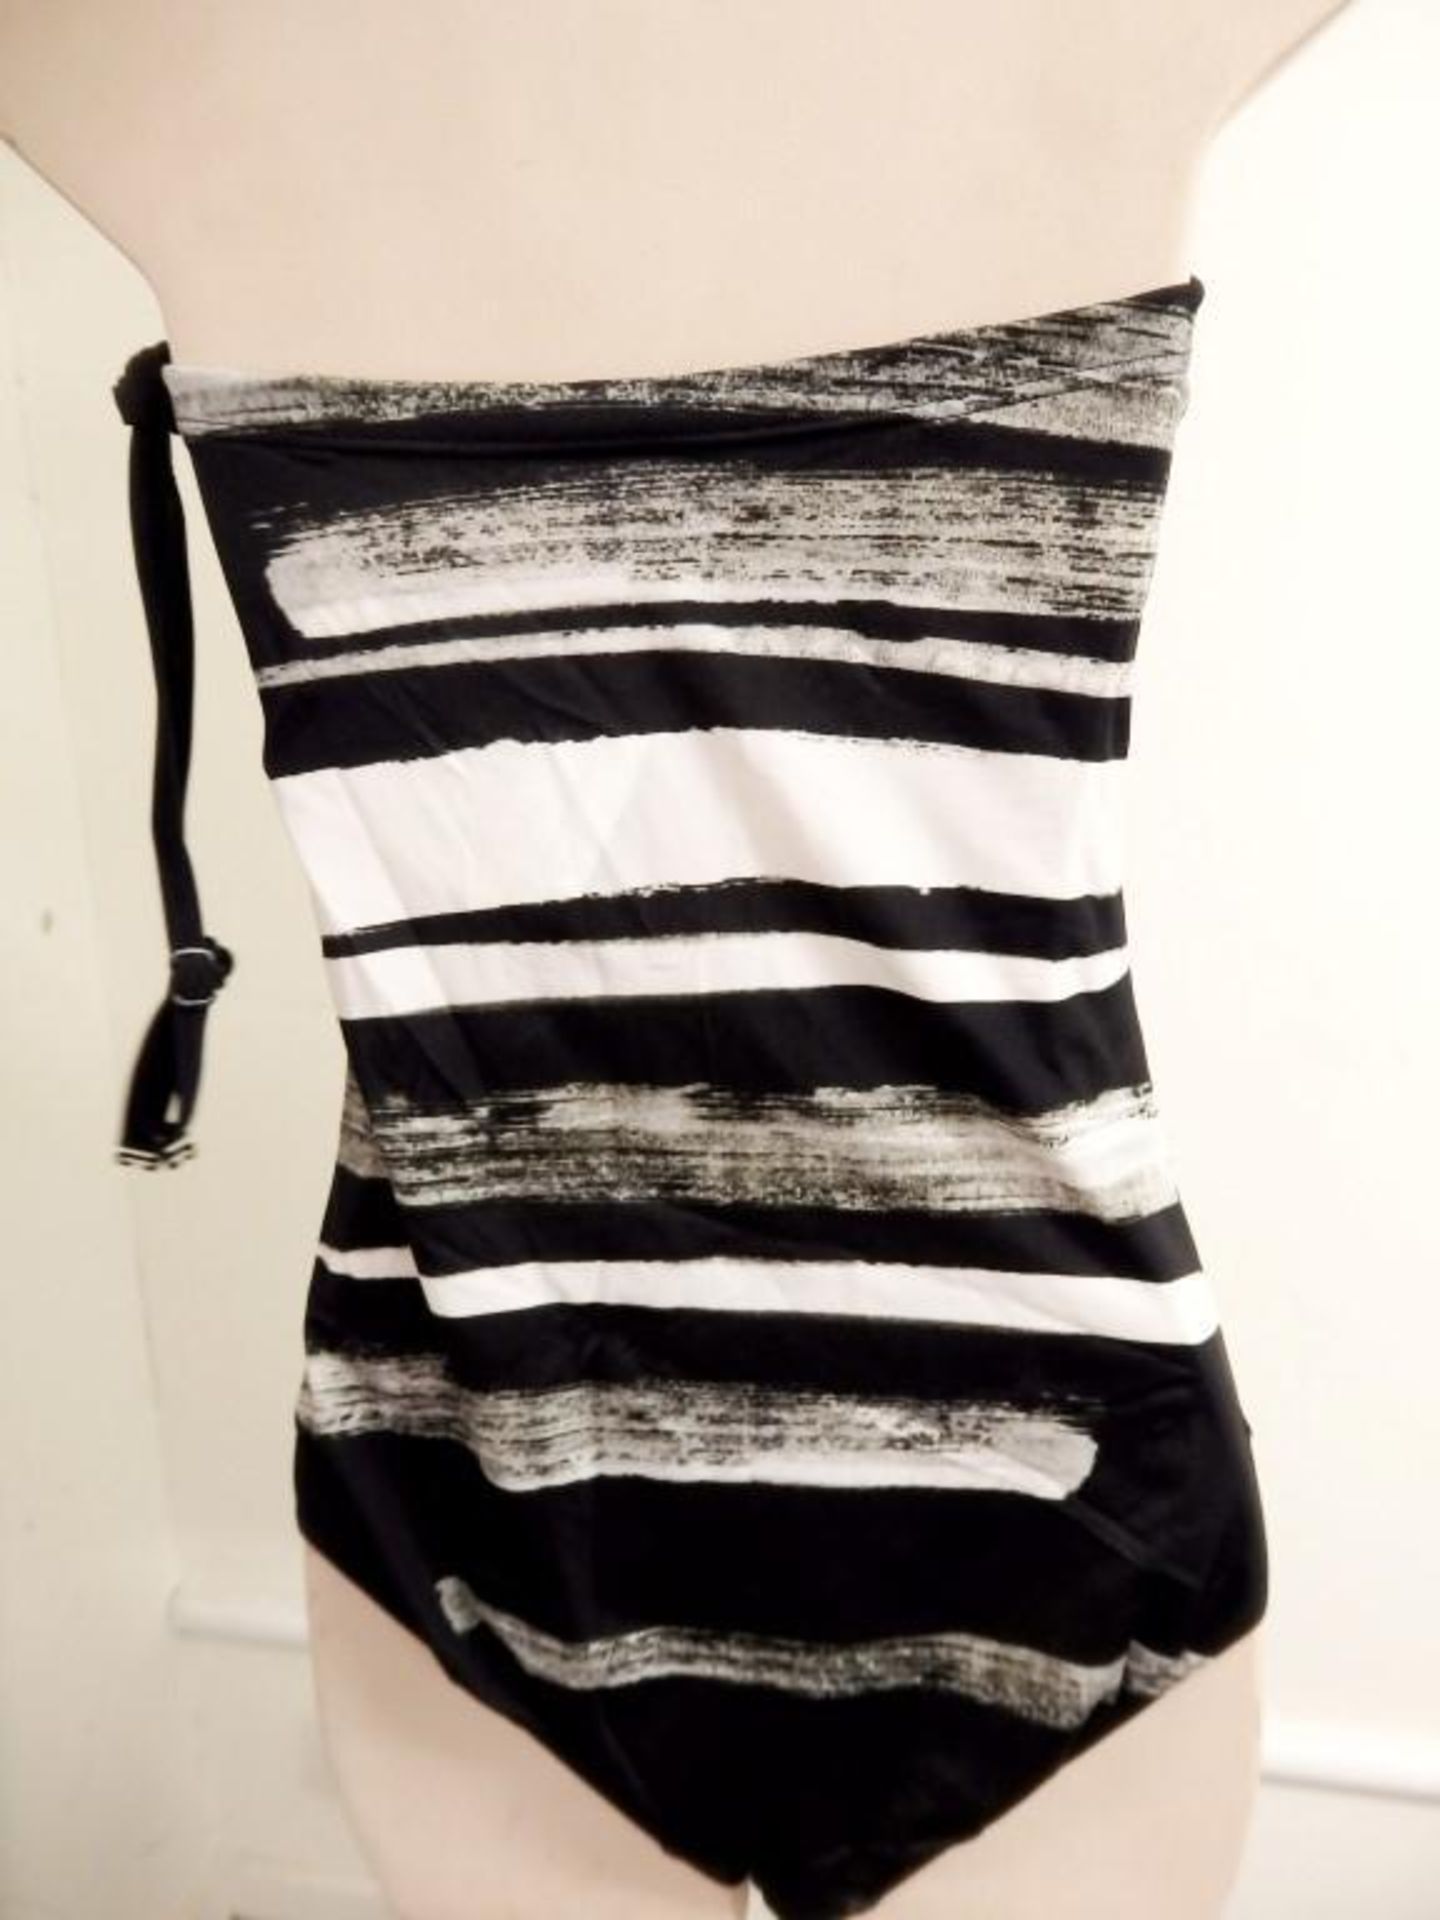 1 x Rasurel - Black/Ecru and vibrant patternedbustier - Cuba Swimsuit - R20738 - Size 2C - UK 32 - - Image 5 of 7